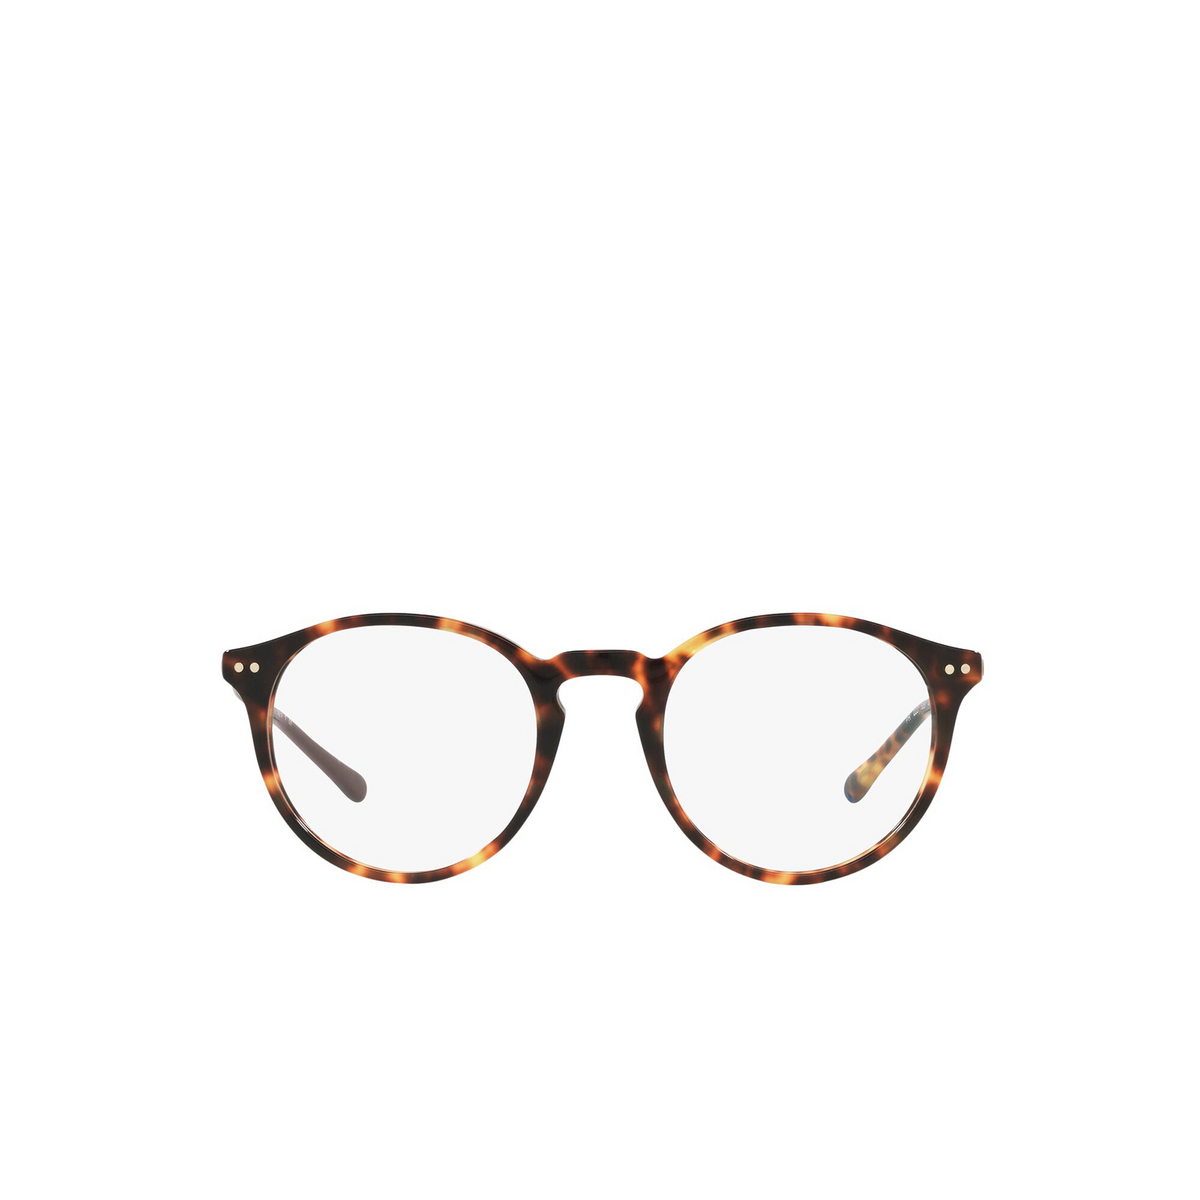 Polo Ralph Lauren PH2227 Eyeglasses 5351 Shiny New Jerry Tortoise - front view